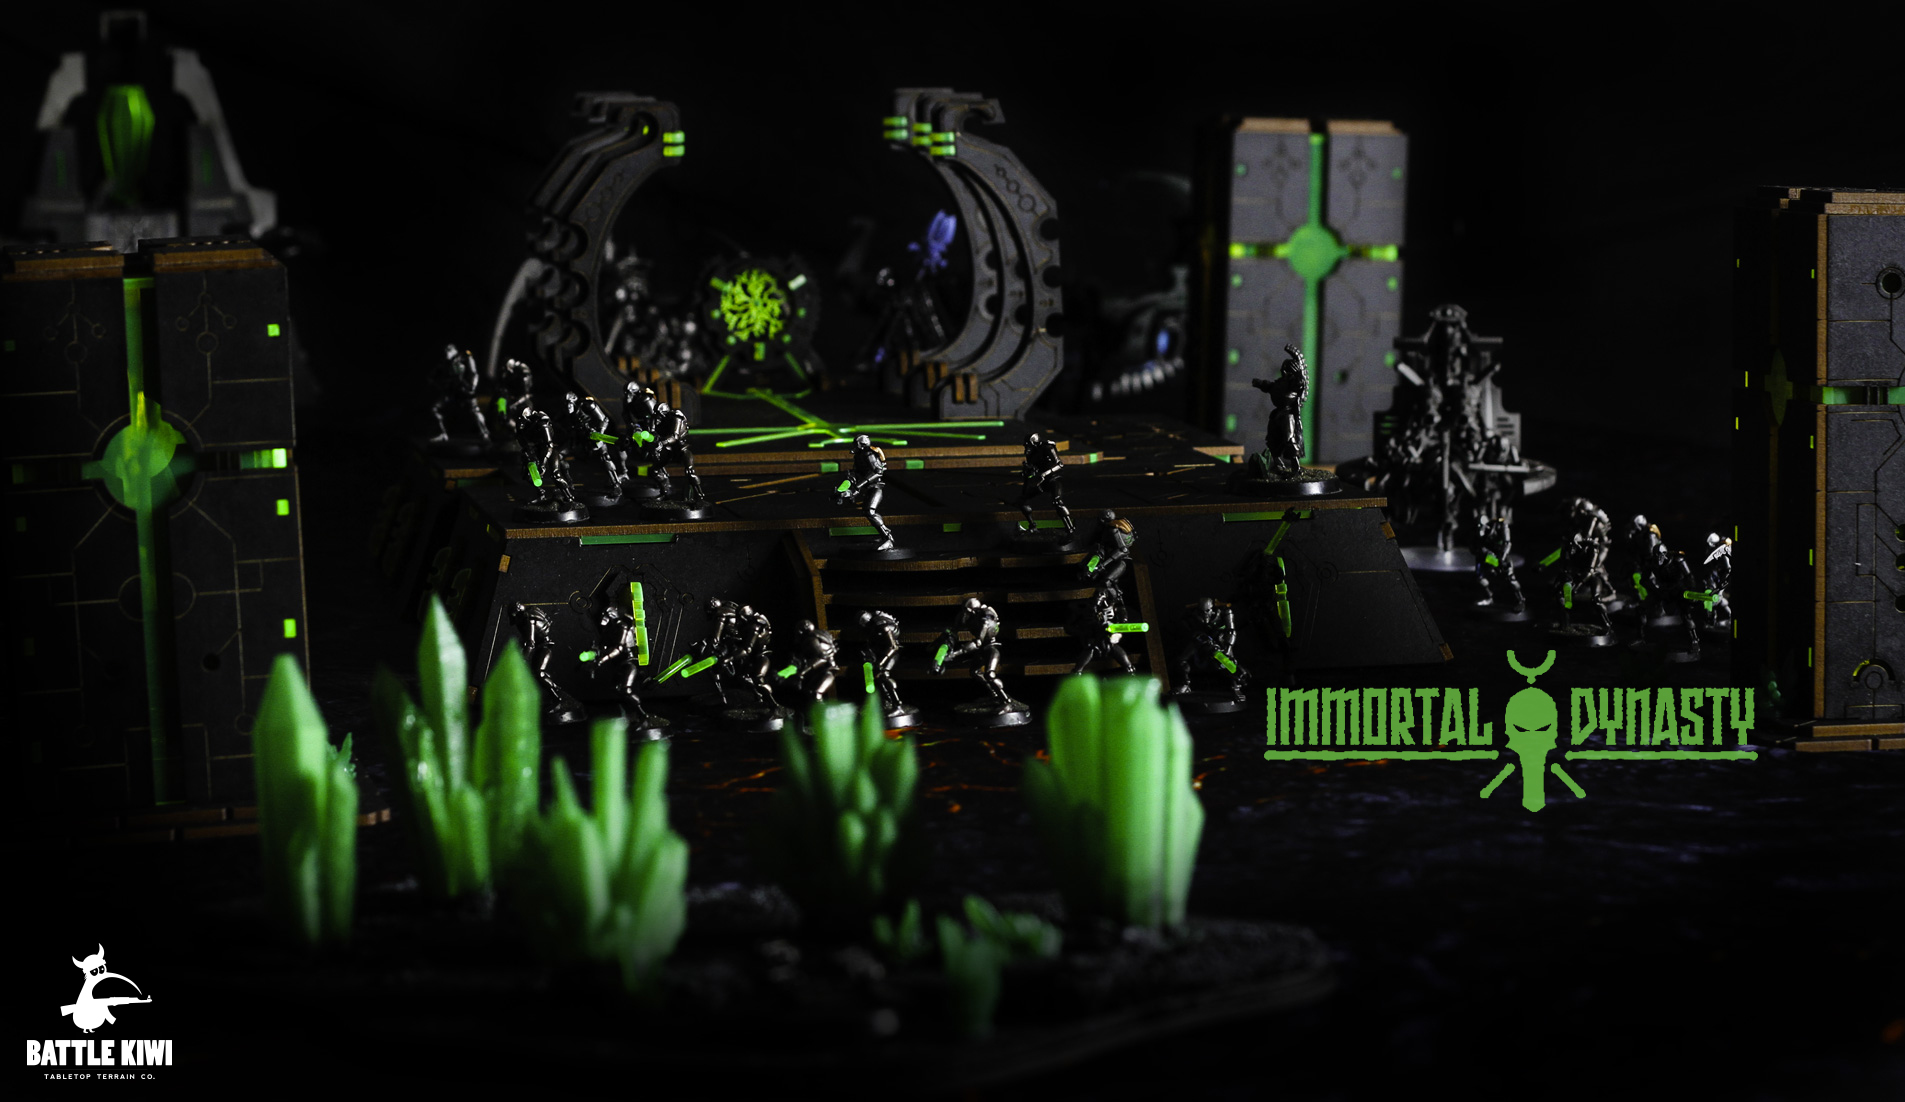 IMMORTAL DYNASTY terrain range for your wh40K & scifi games has risen! Preprimed in Dark Galaxy Black!